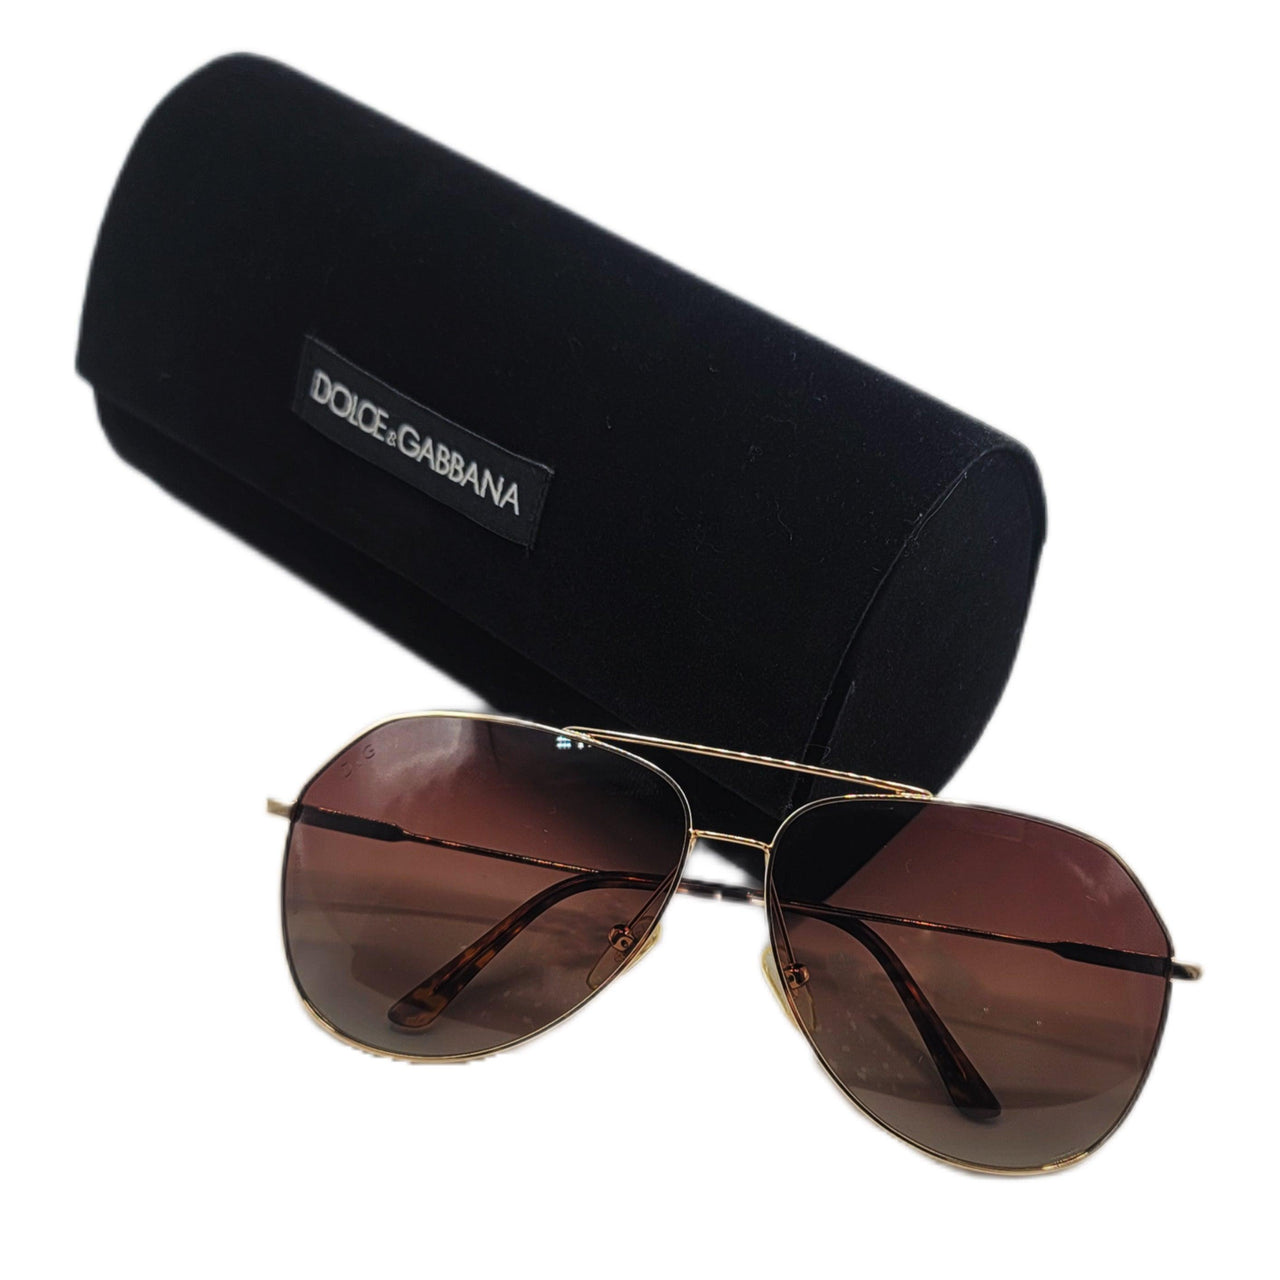 The Bag Couture Sunglasses Dolce & Gabbana Sunglasses